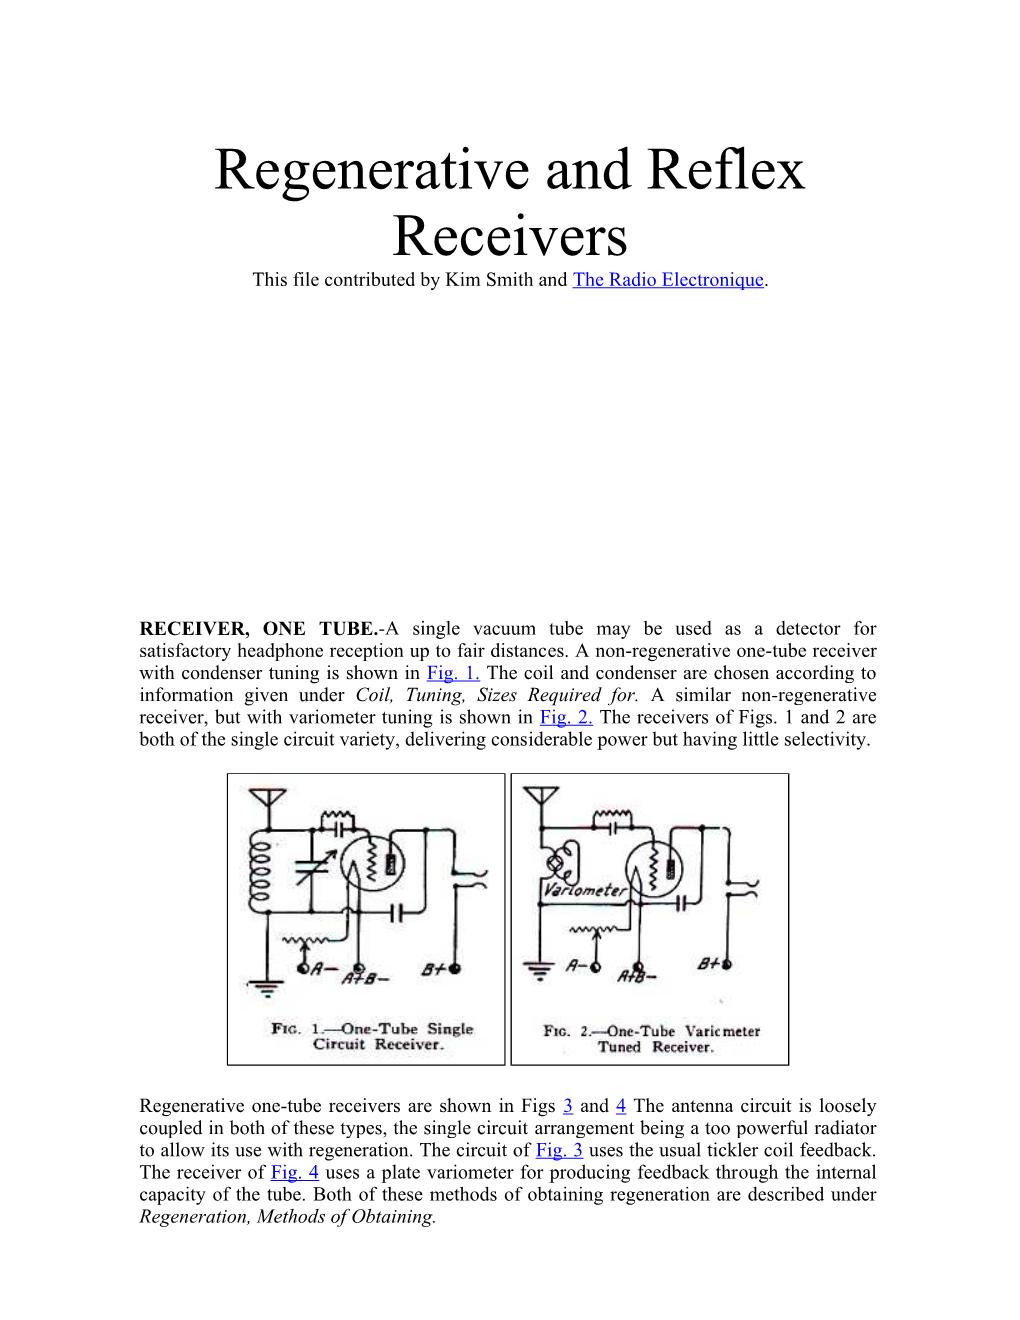 Regenerative and Reflex Receivers